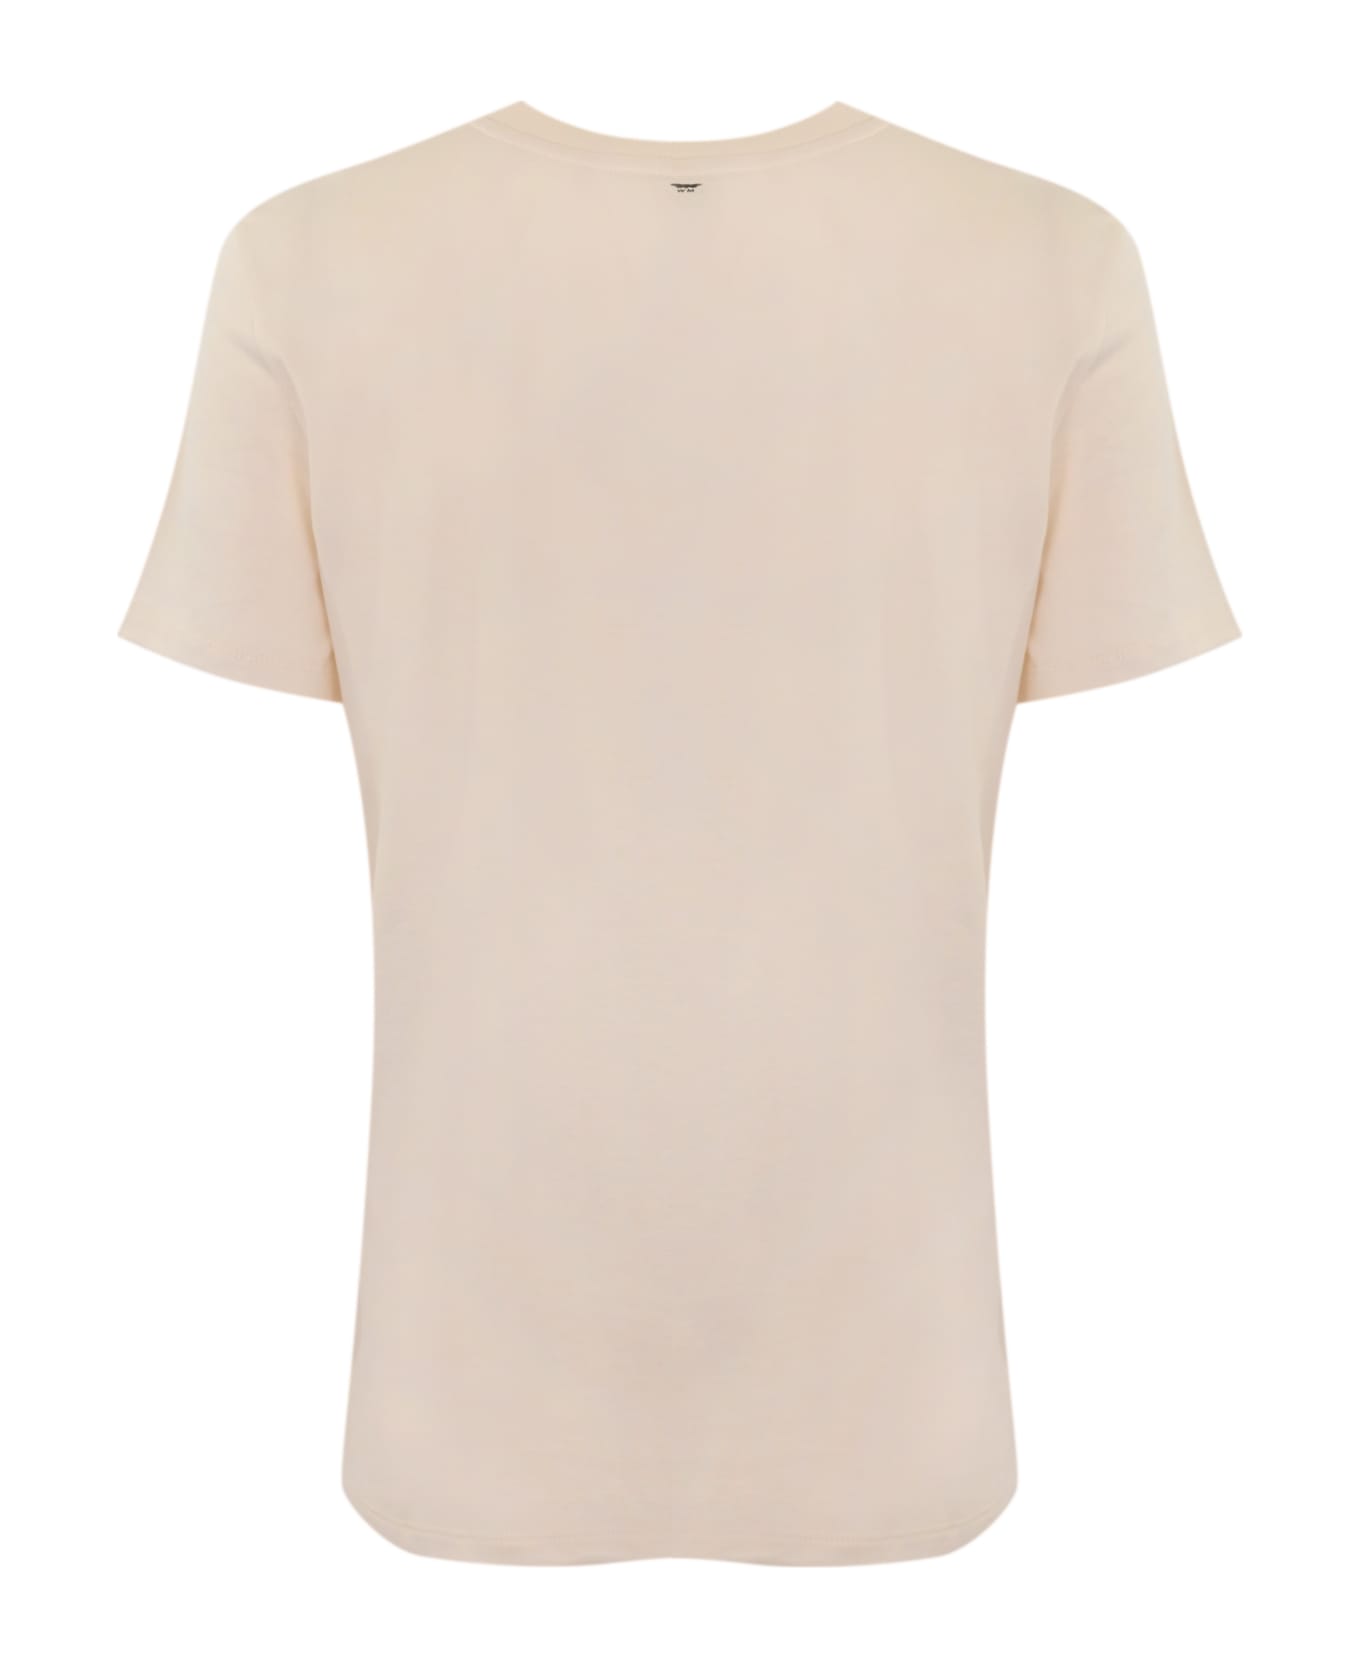 Weekend Max Mara 'nervi' Cotton T-shirt With Nervers Print - Avorio